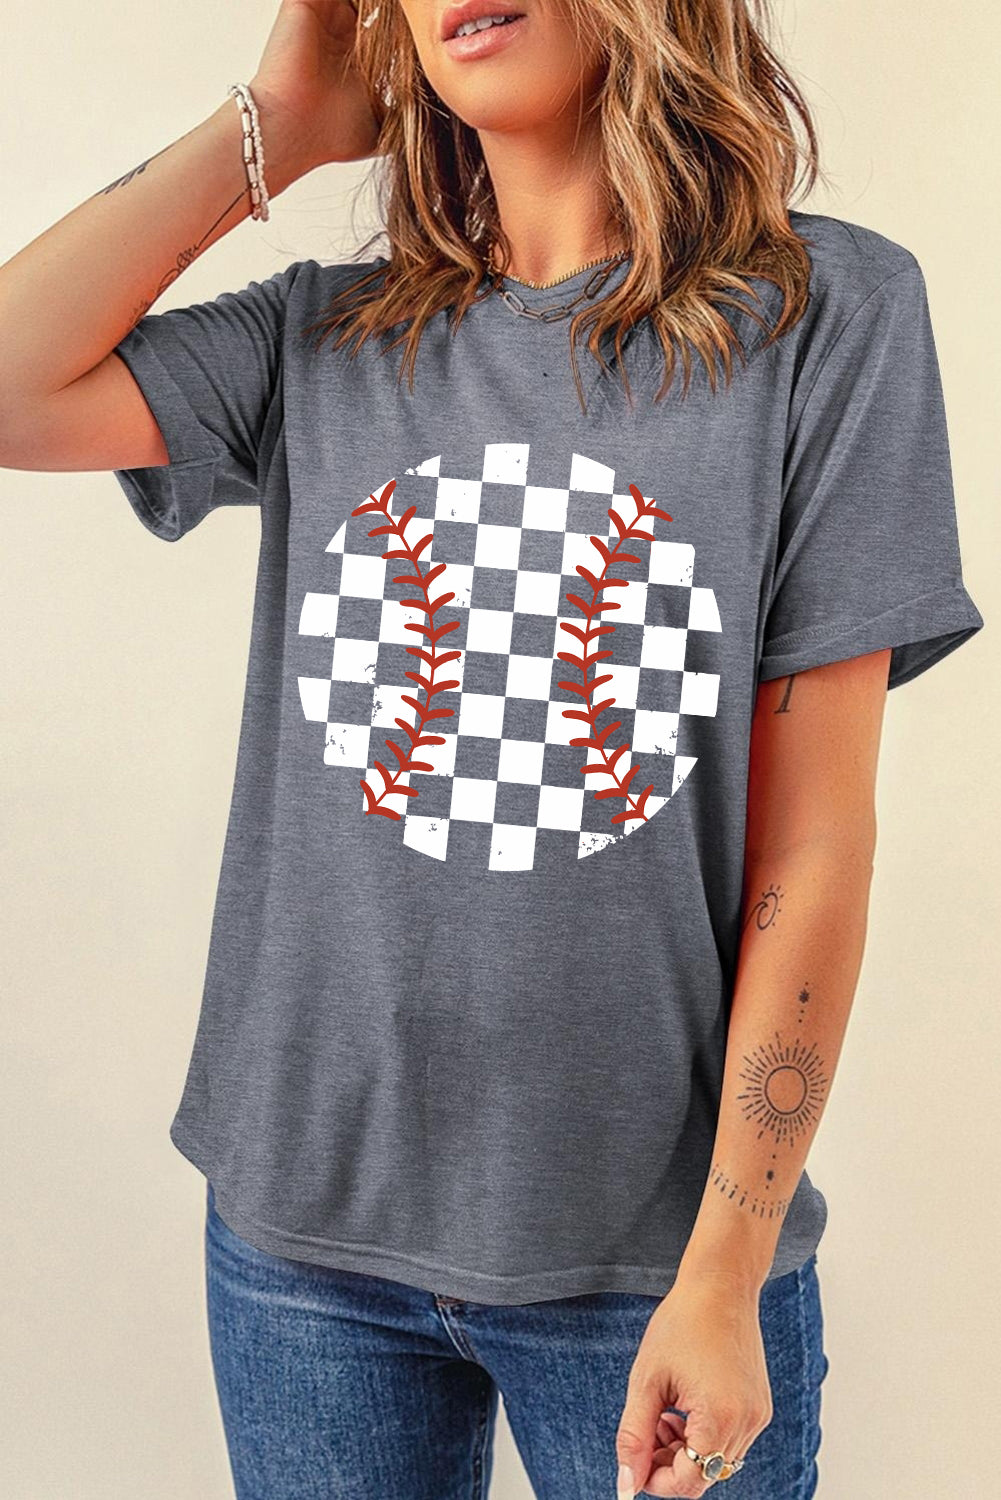 Checkered Baseball Women's Graphic Short Sleeve T-Shirt - Sydney So Sweet